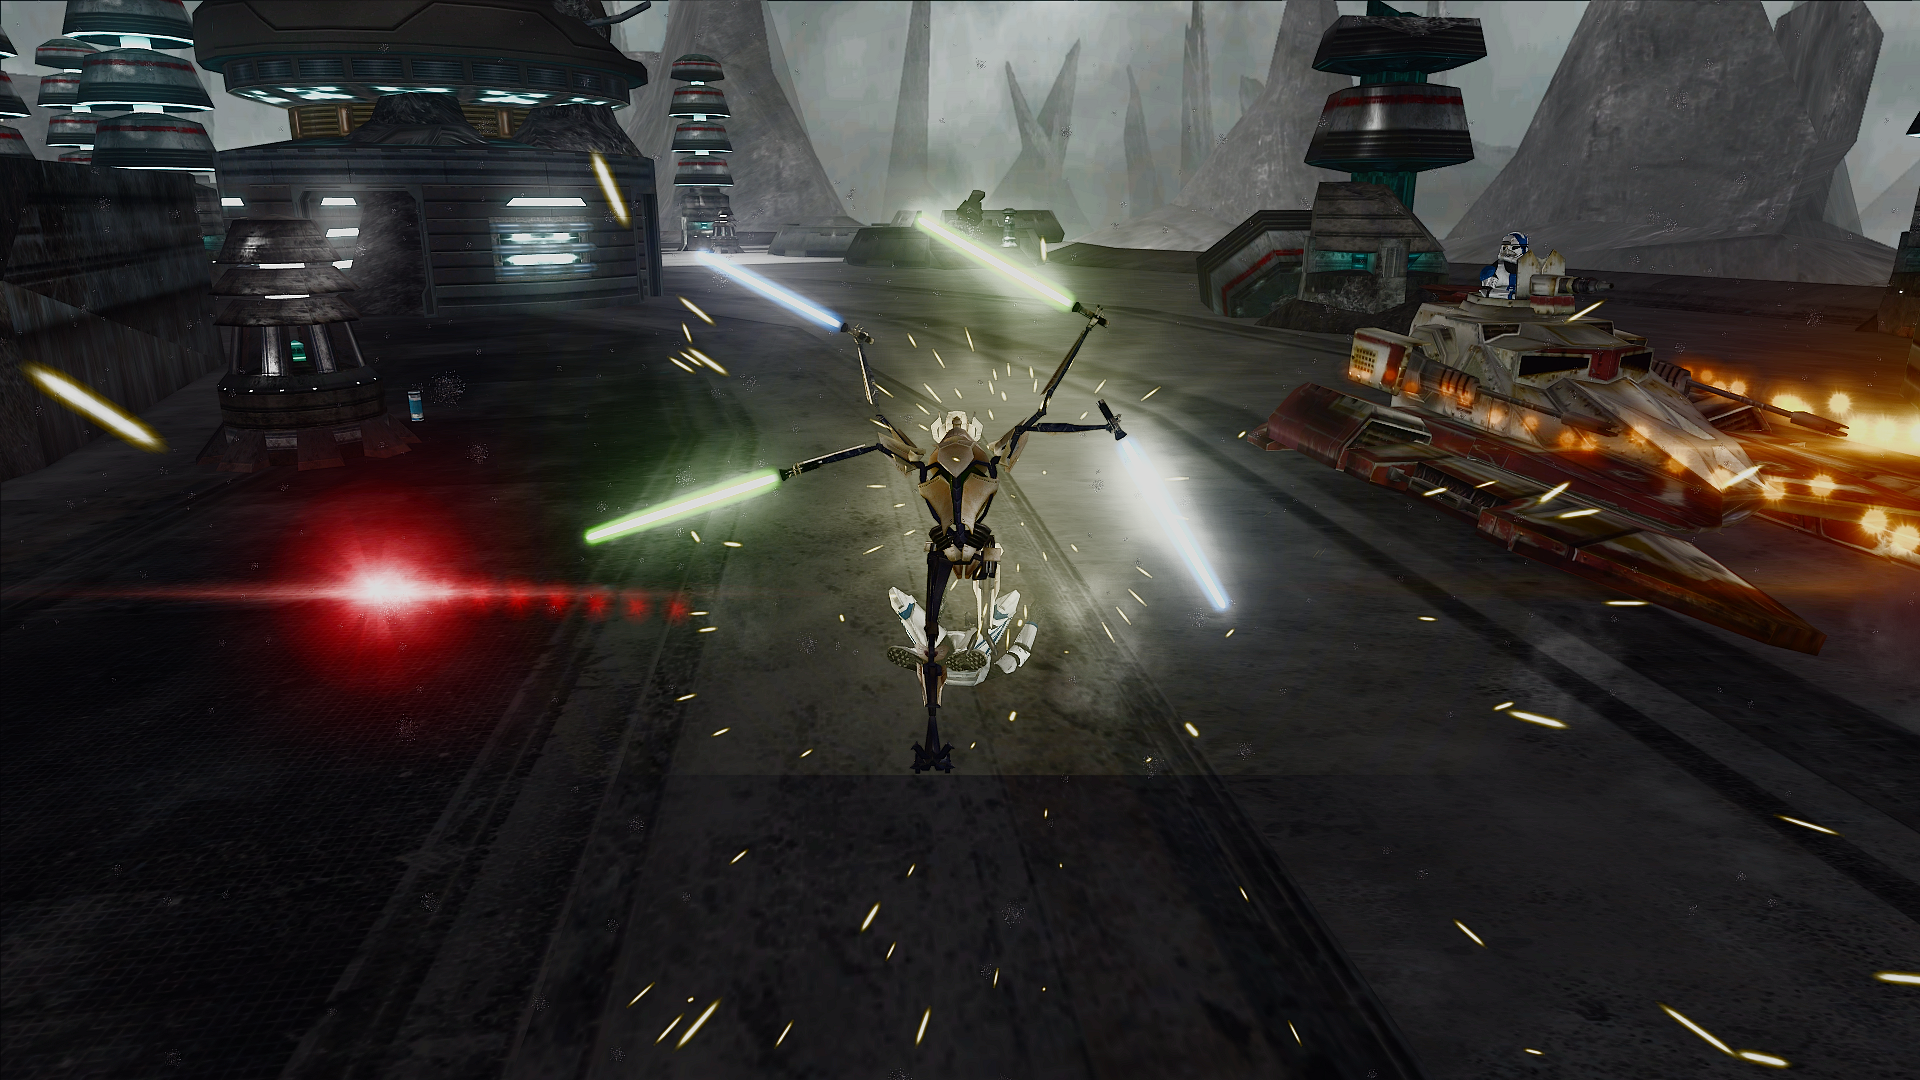 star wars battlefront 2 full game pc free download